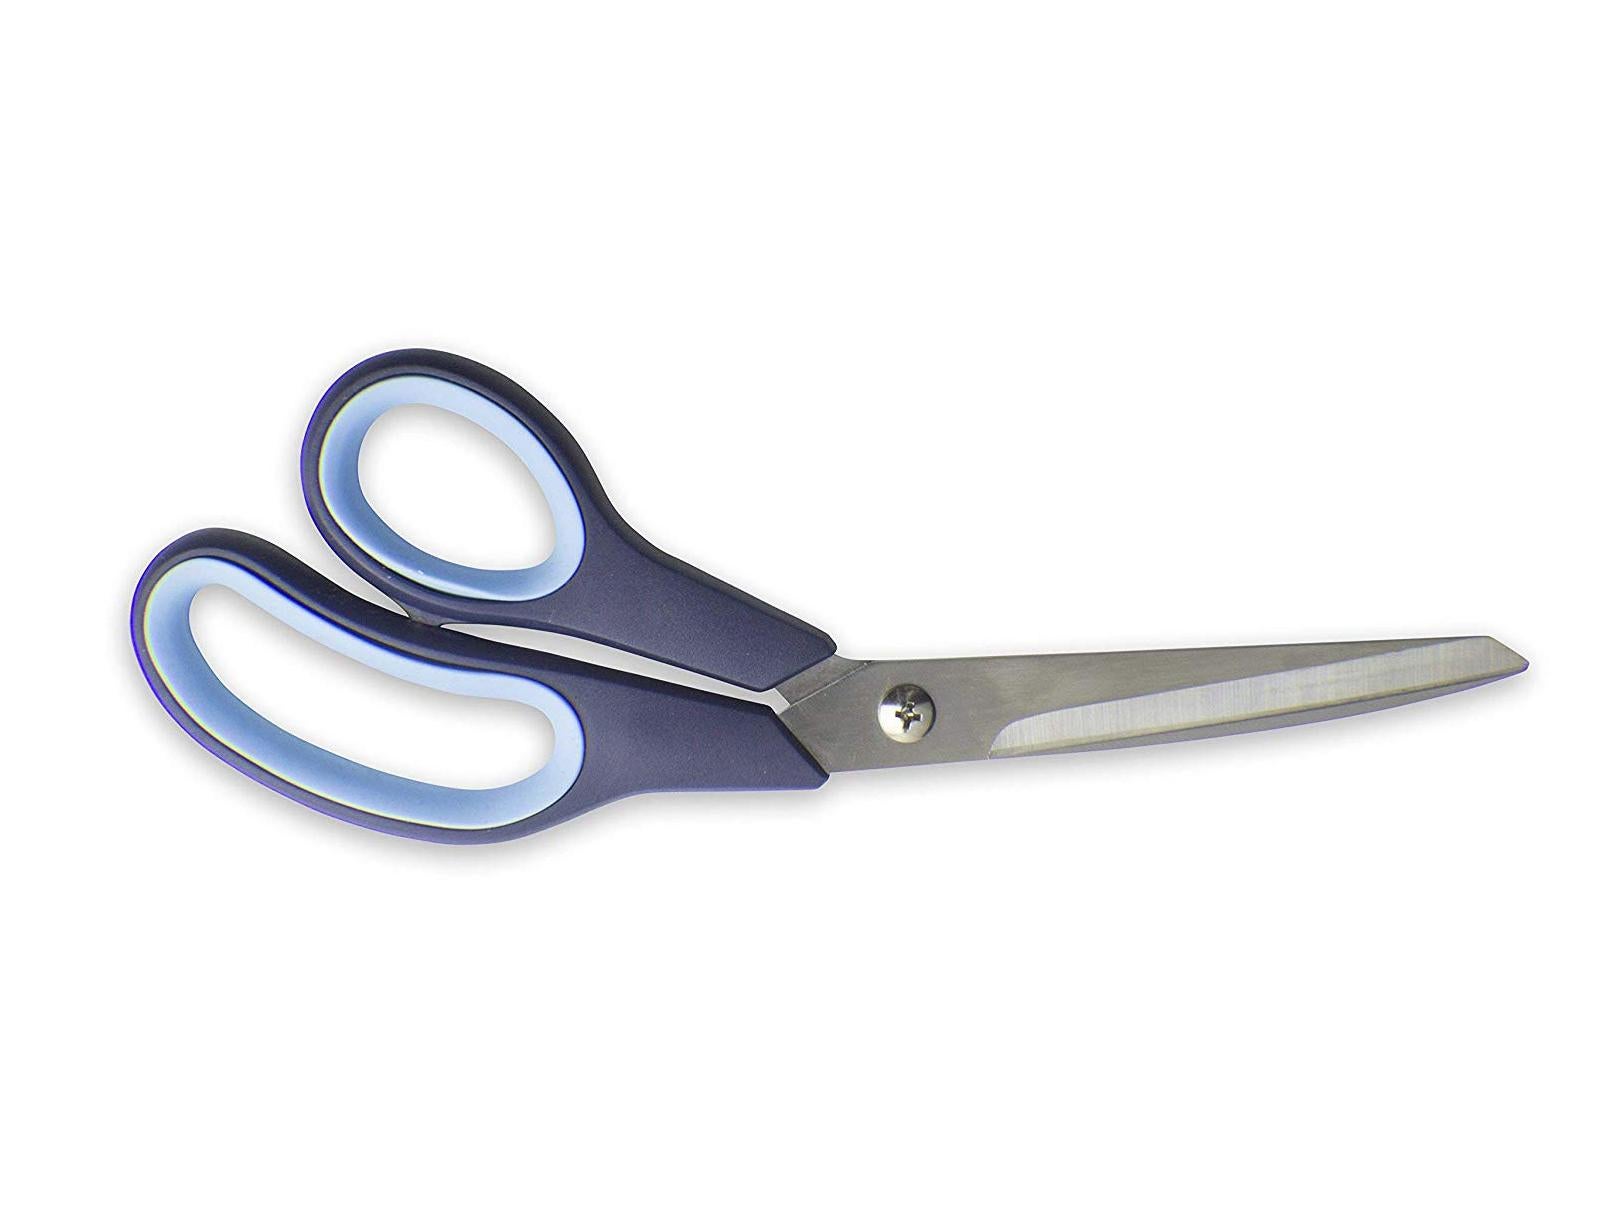 Lightweight//Compact With Long Blades 2 x Fiskars Classic Paper Cutting Scissors